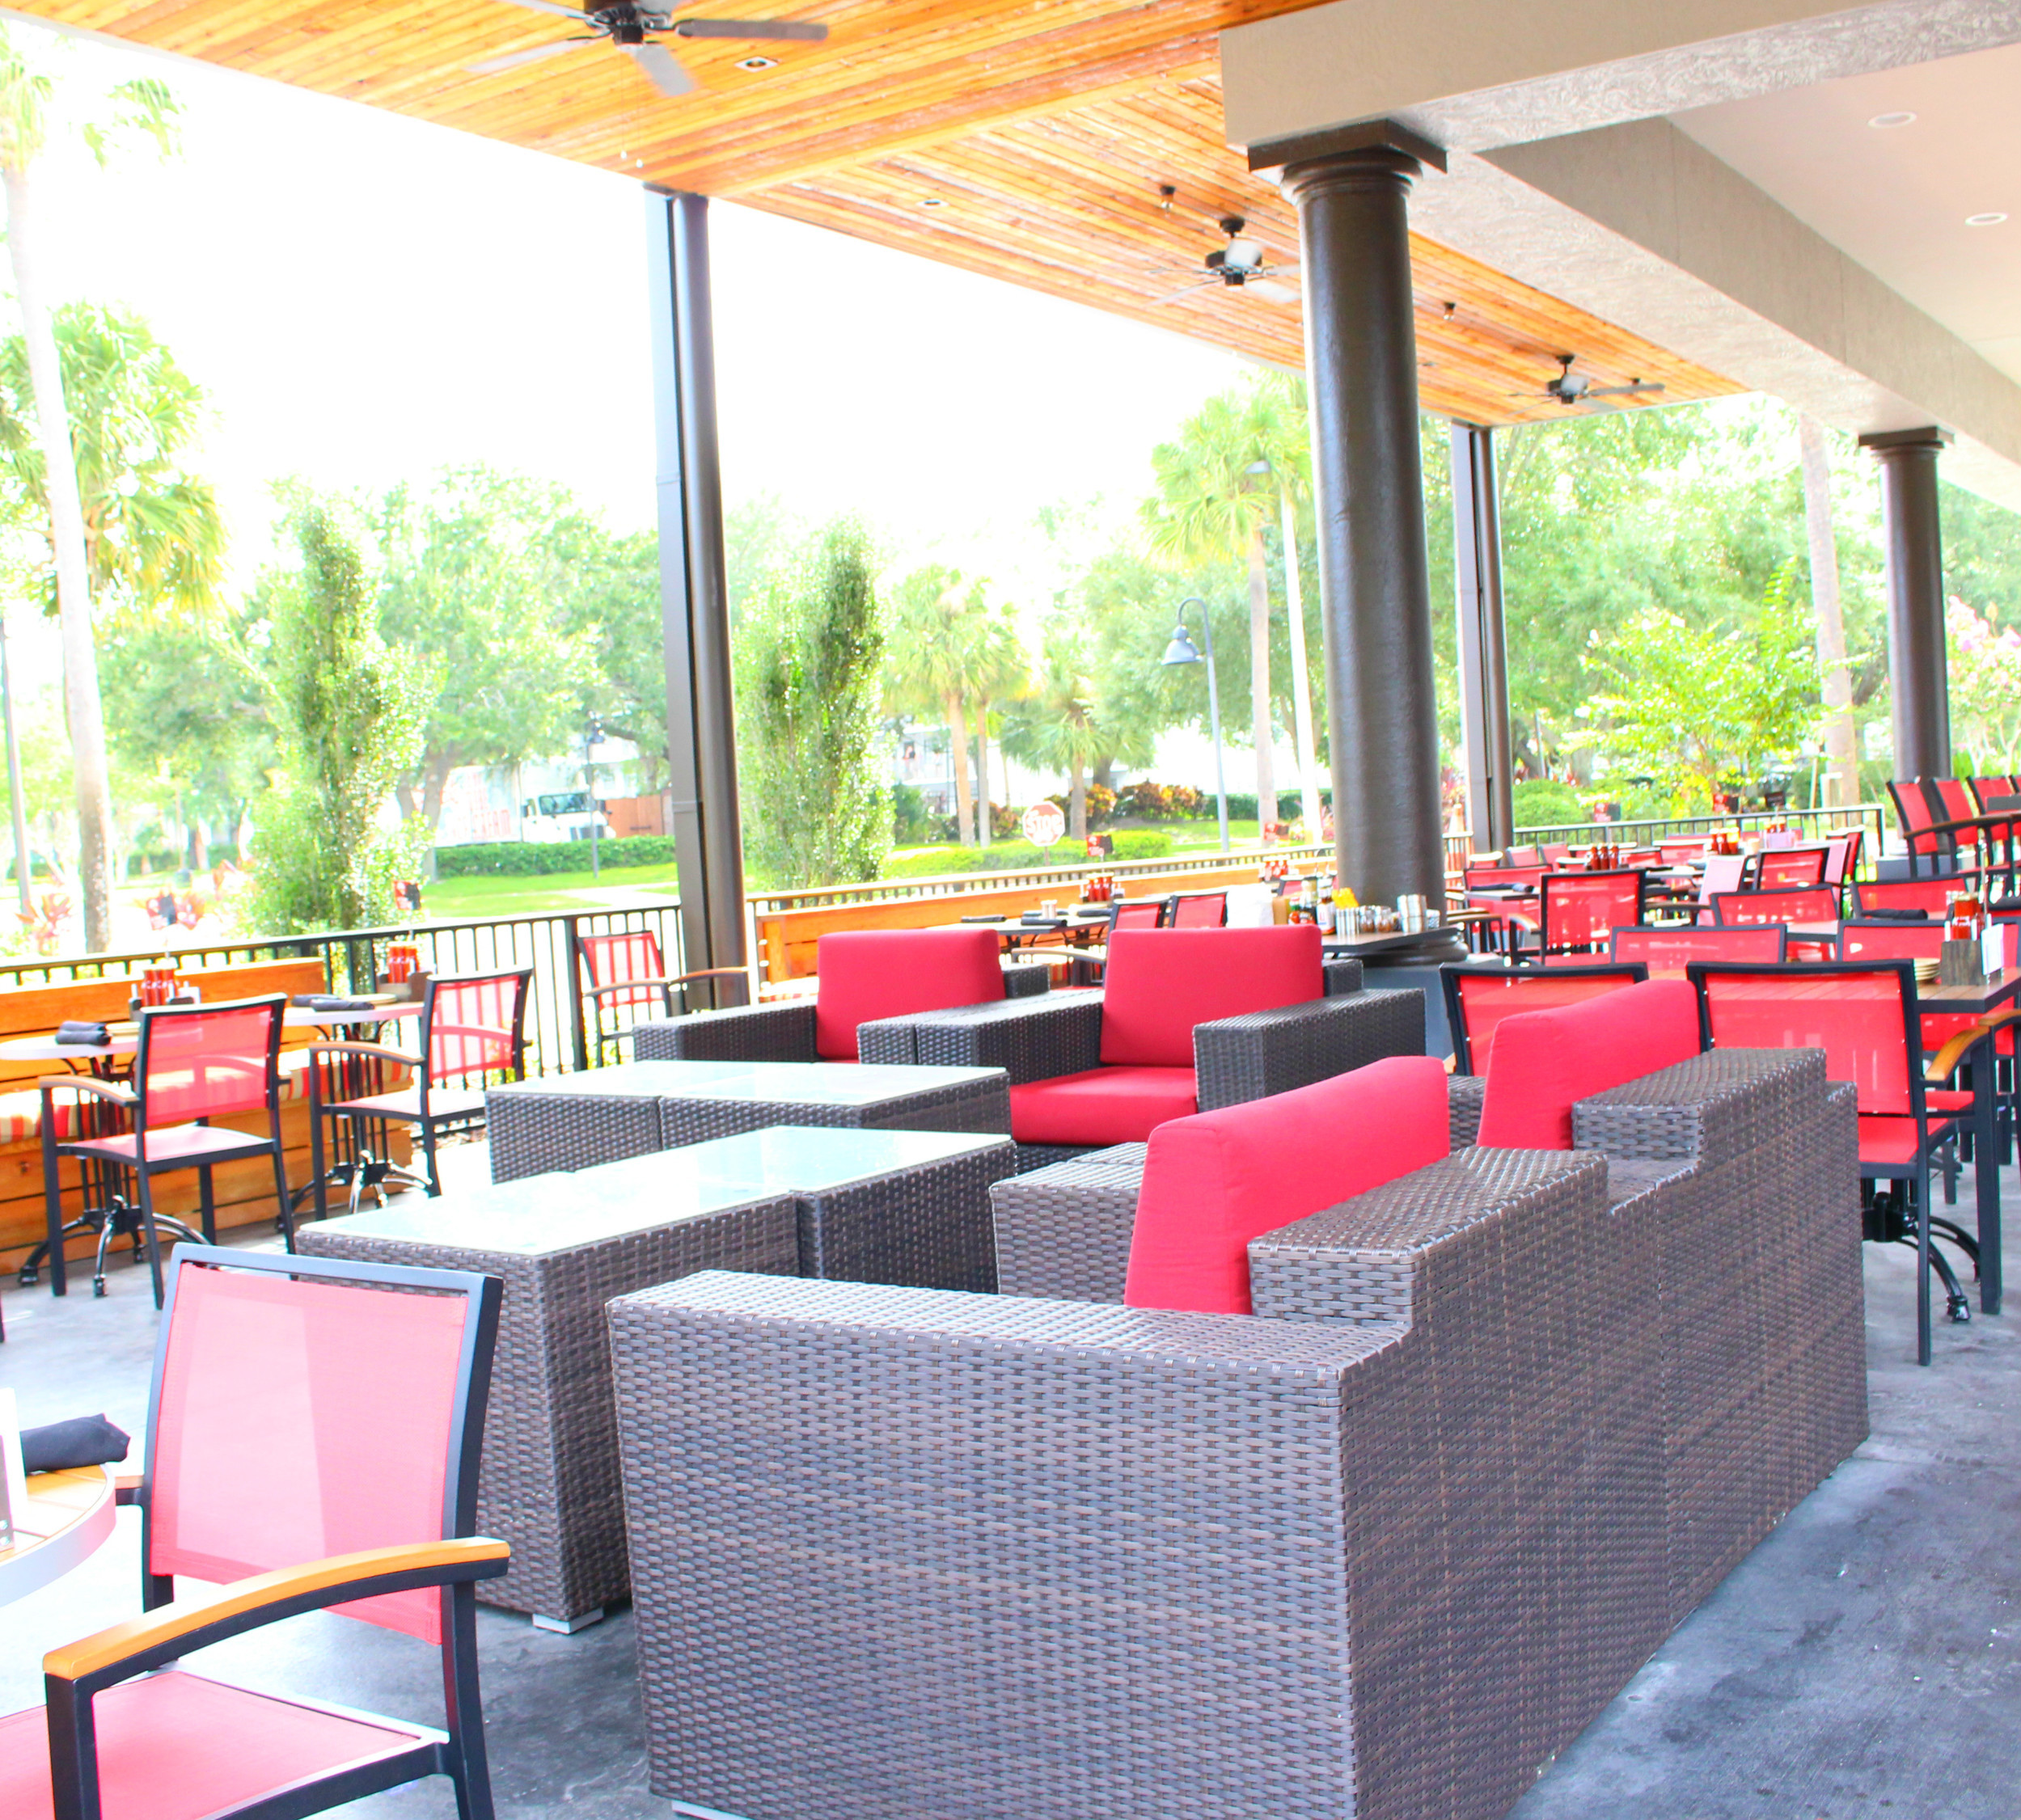 Best ideas about The Patio Orlando
. Save or Pin Tony Romas Orlando International Drive patio 2 Now.